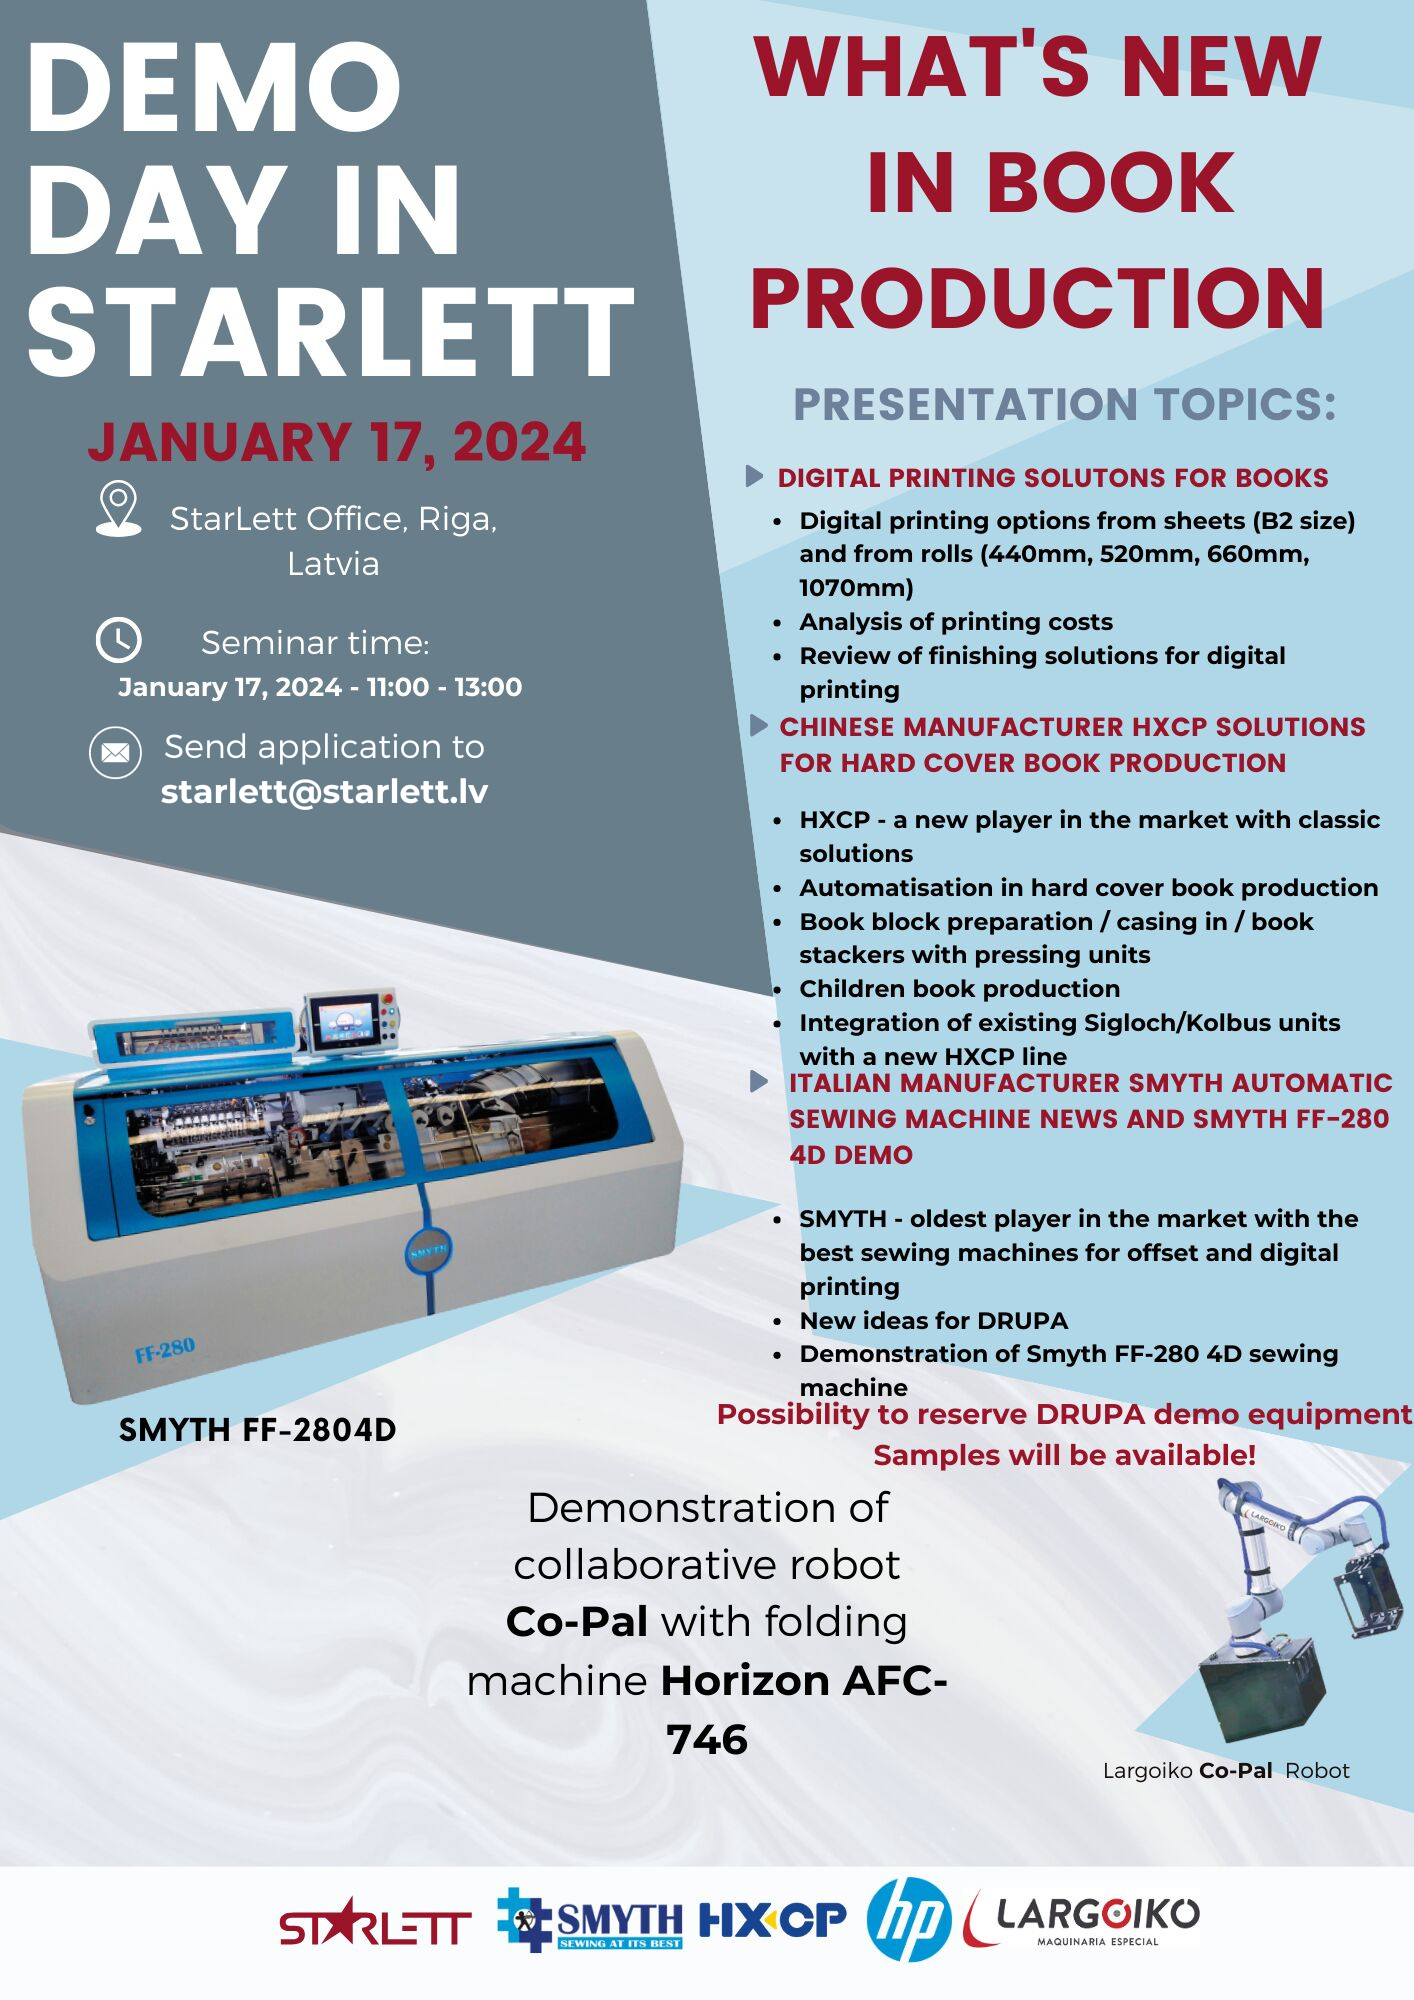 Send your application to starlett@starlett.lv.png